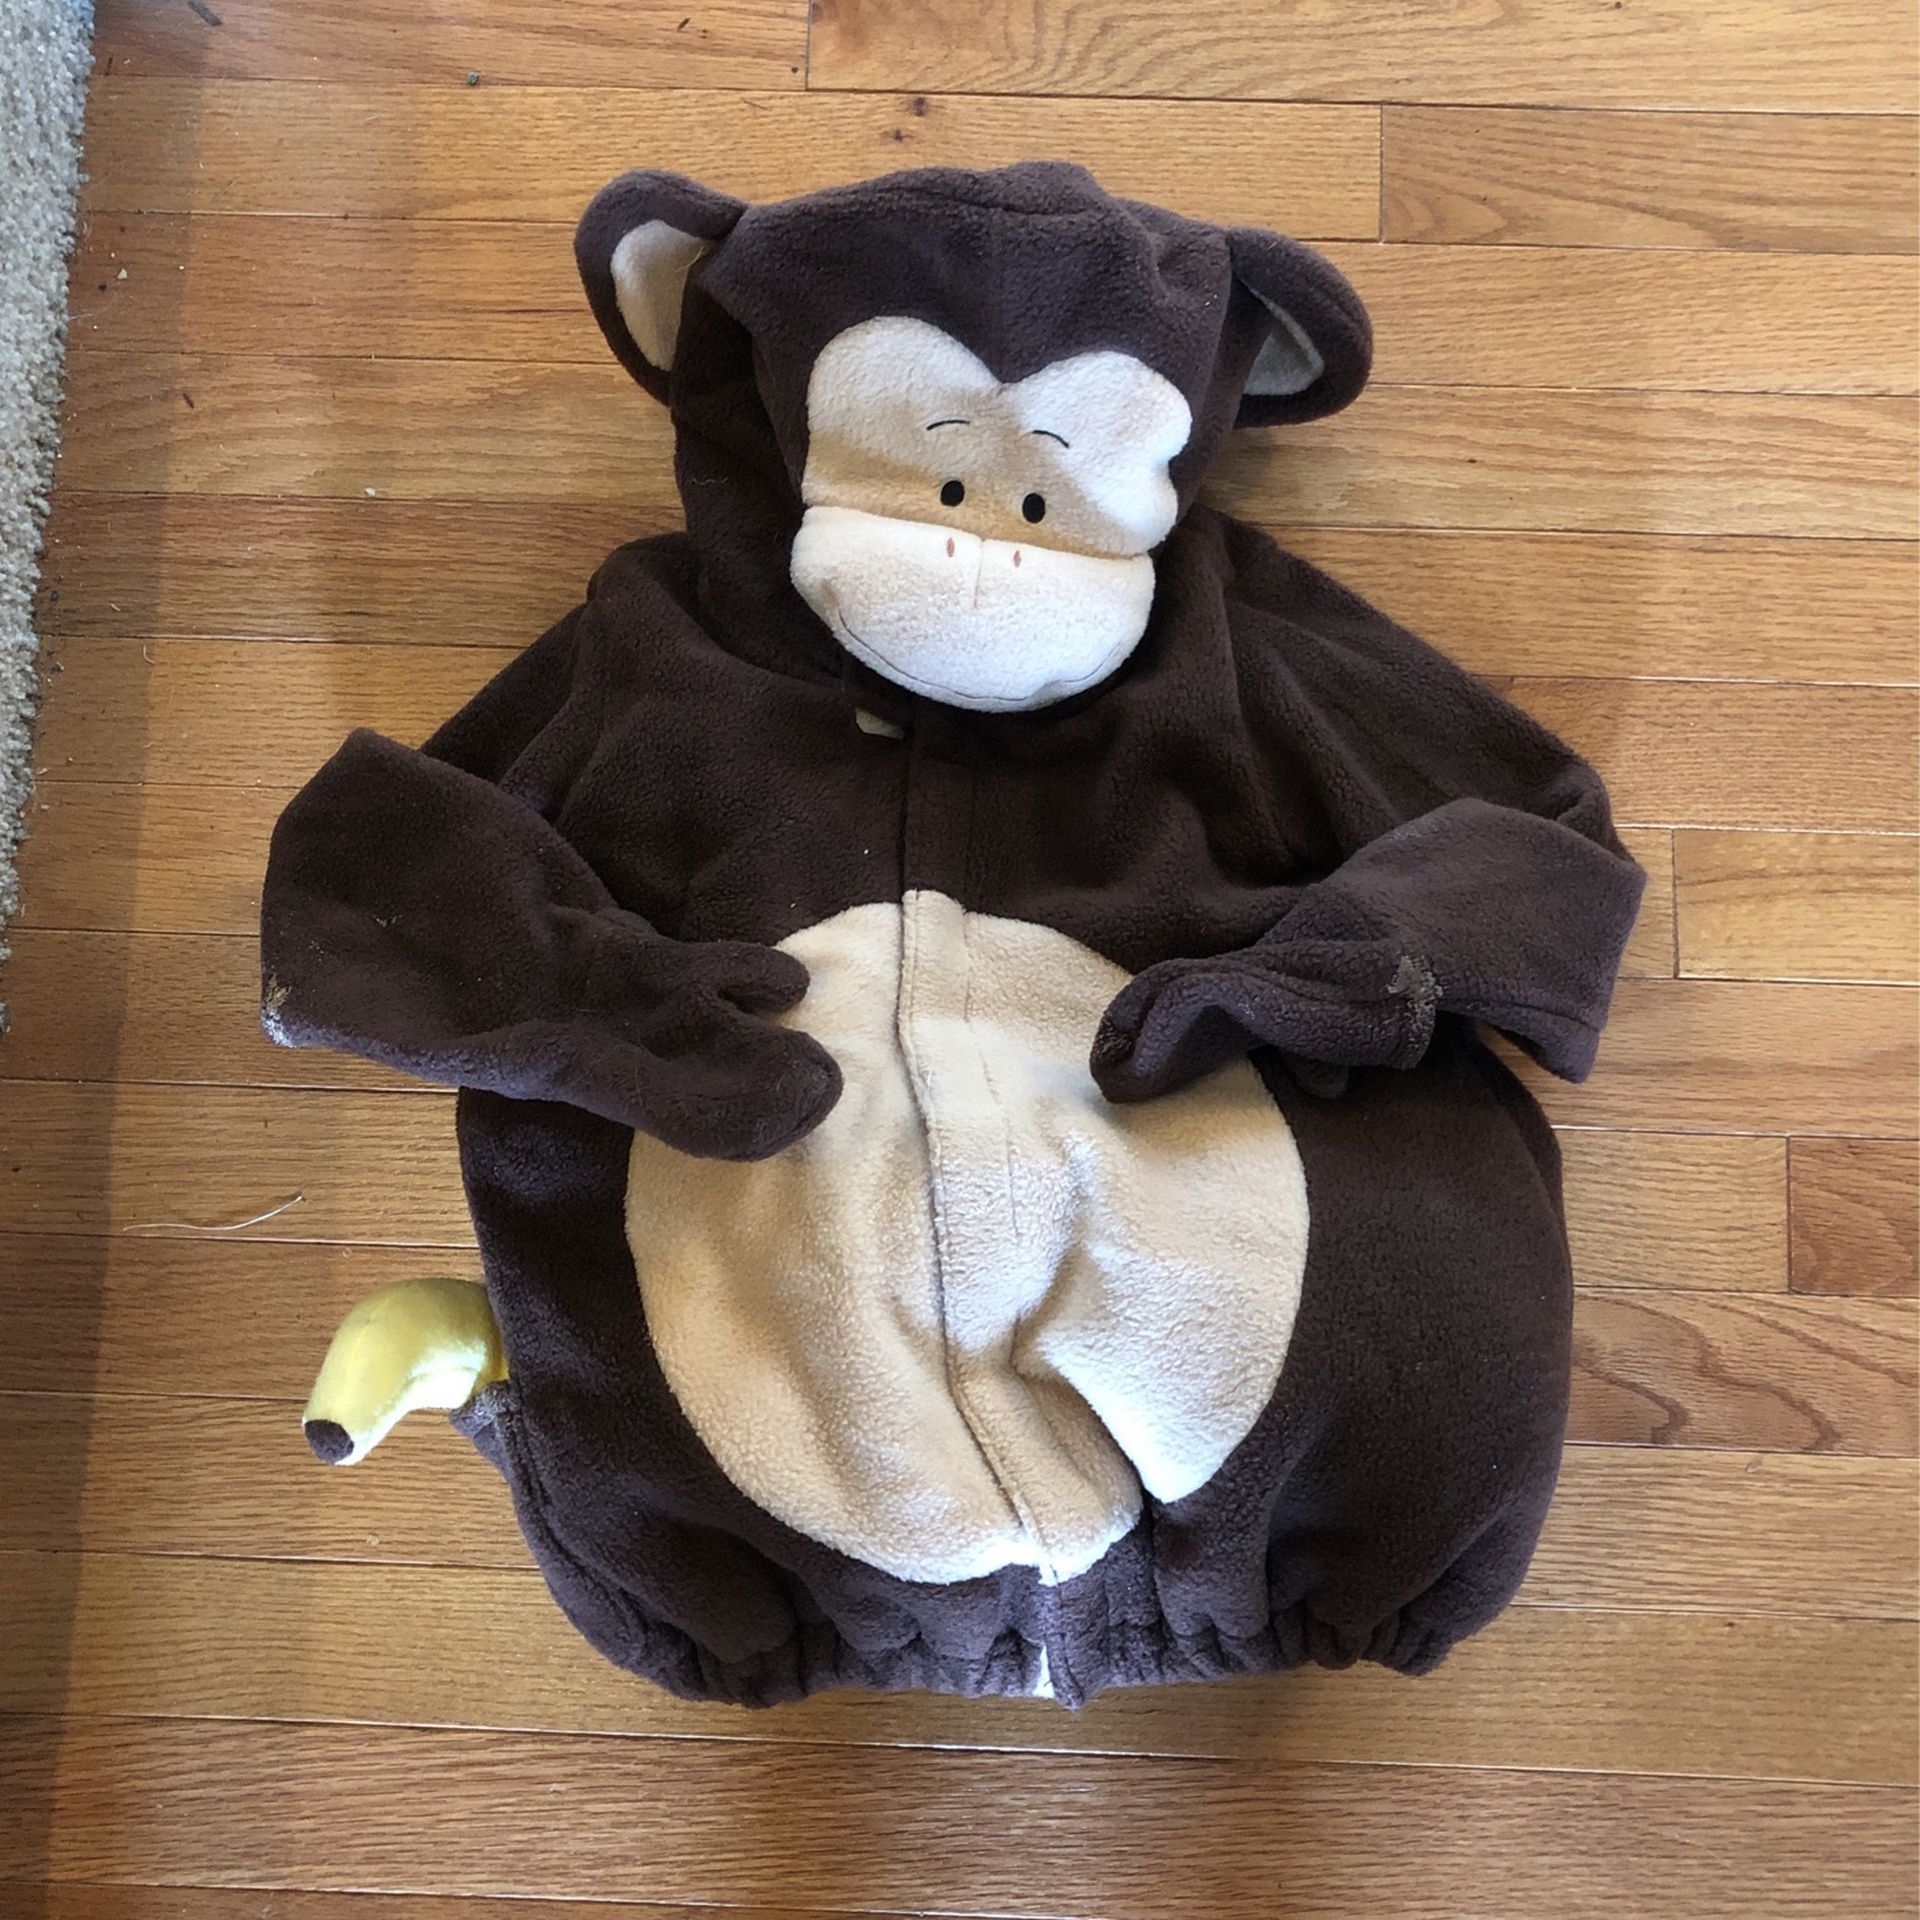 Toddler monkey costume (Old navy)